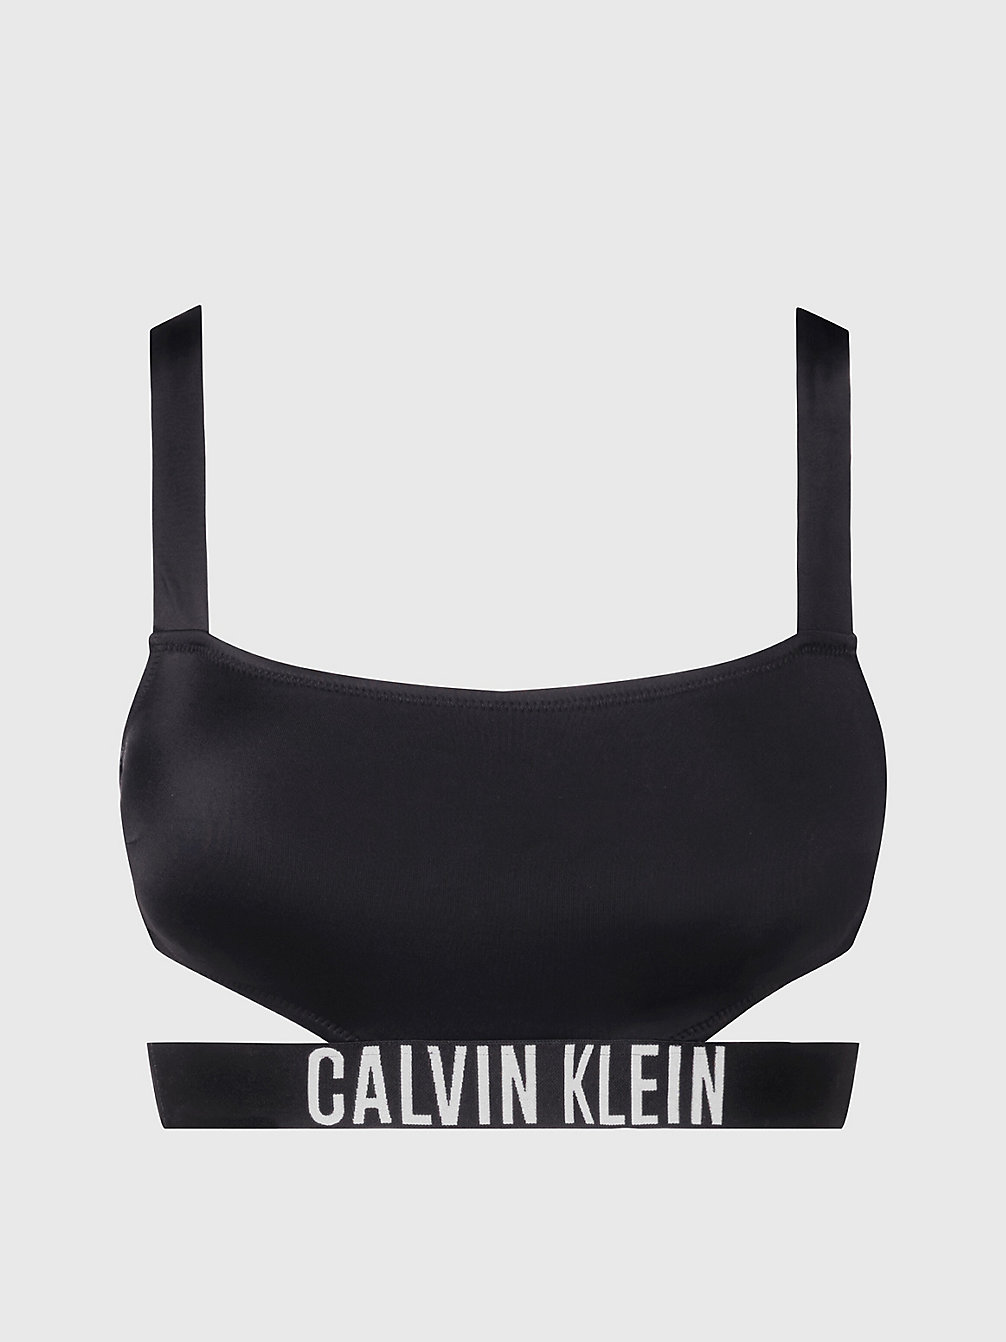 PVH BLACK Haut De Bikini Brassière - Intense Power undefined femmes Calvin Klein